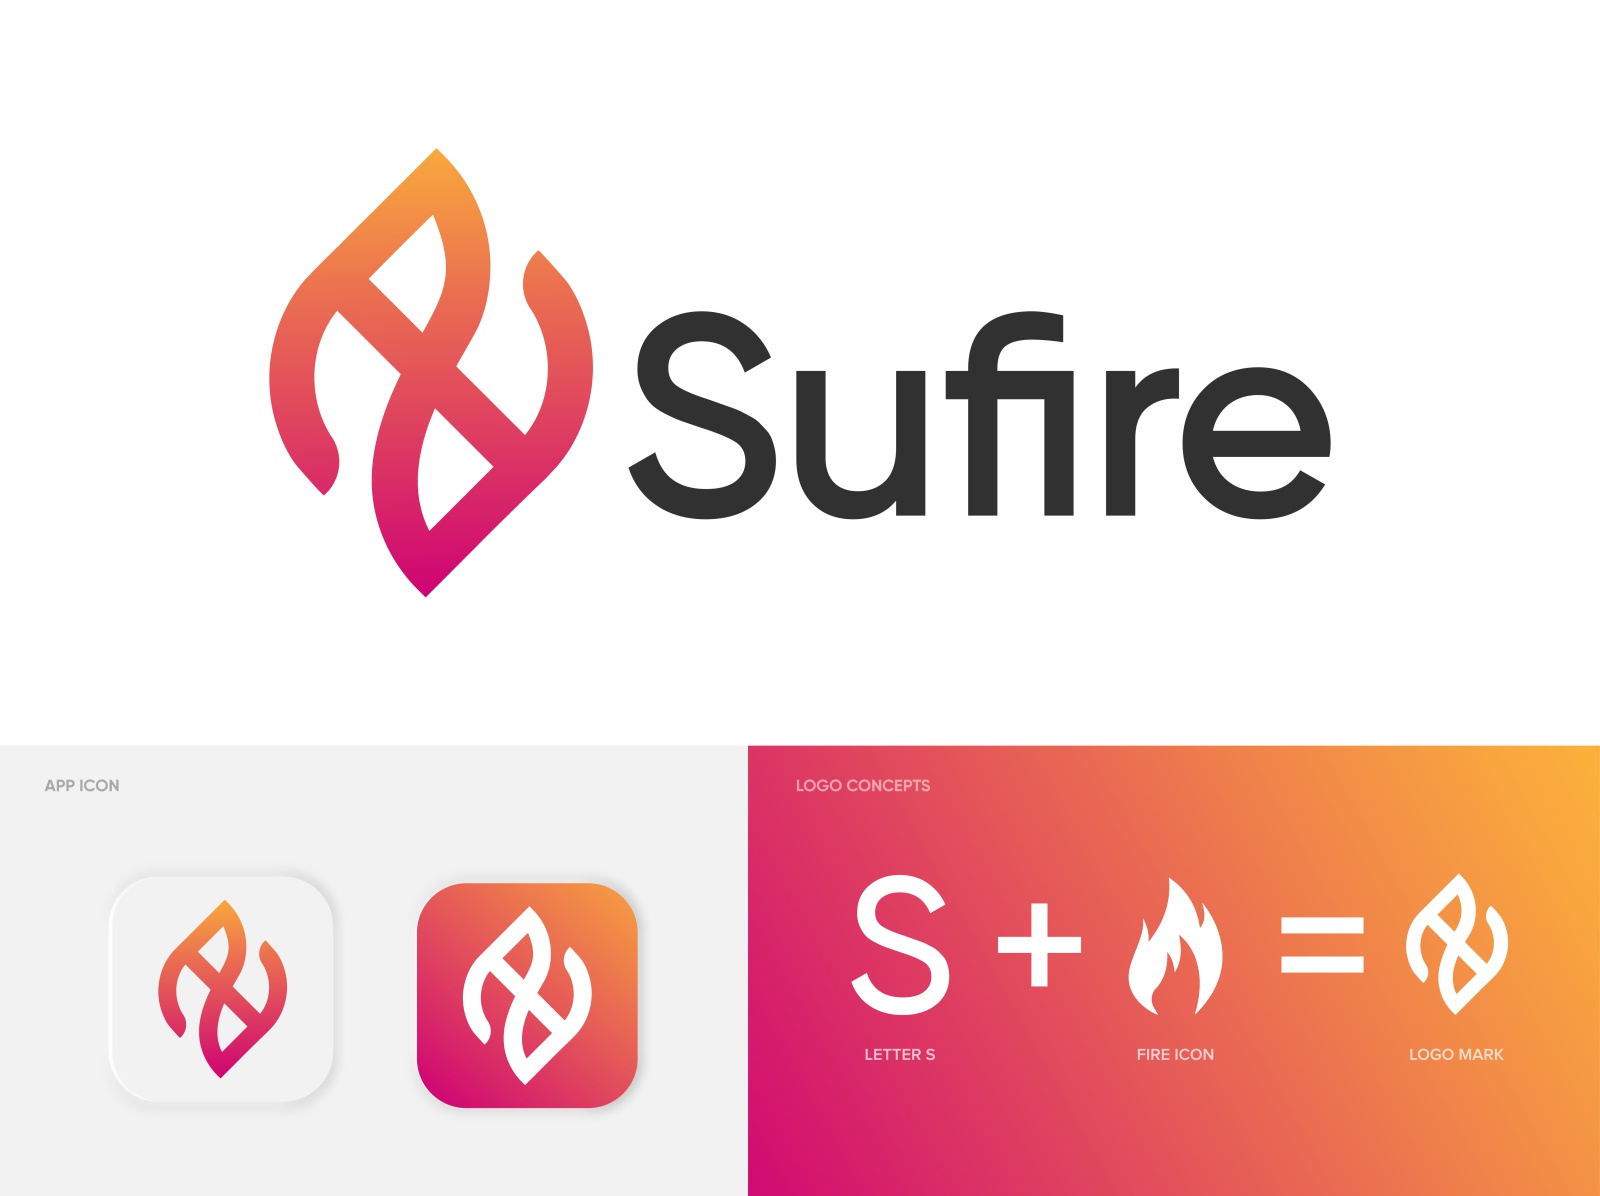 Sufire logo design